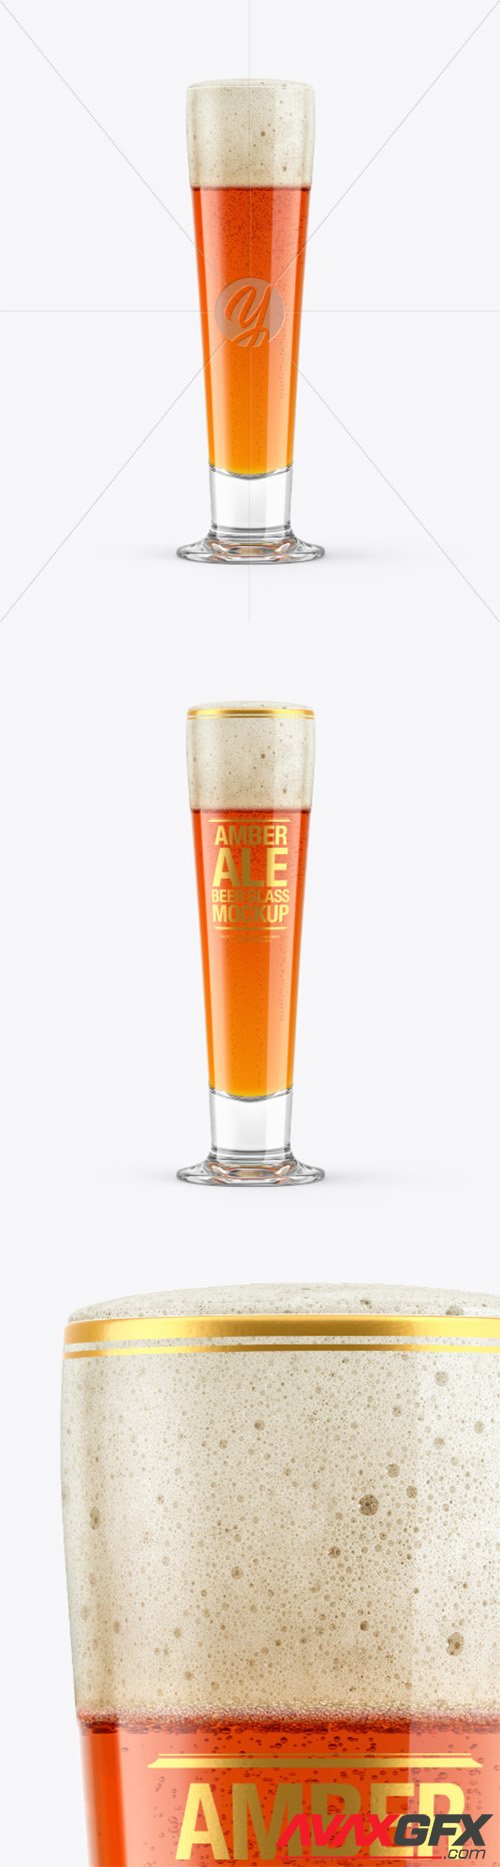 Amber Ale Beer Glass Mockup 65174